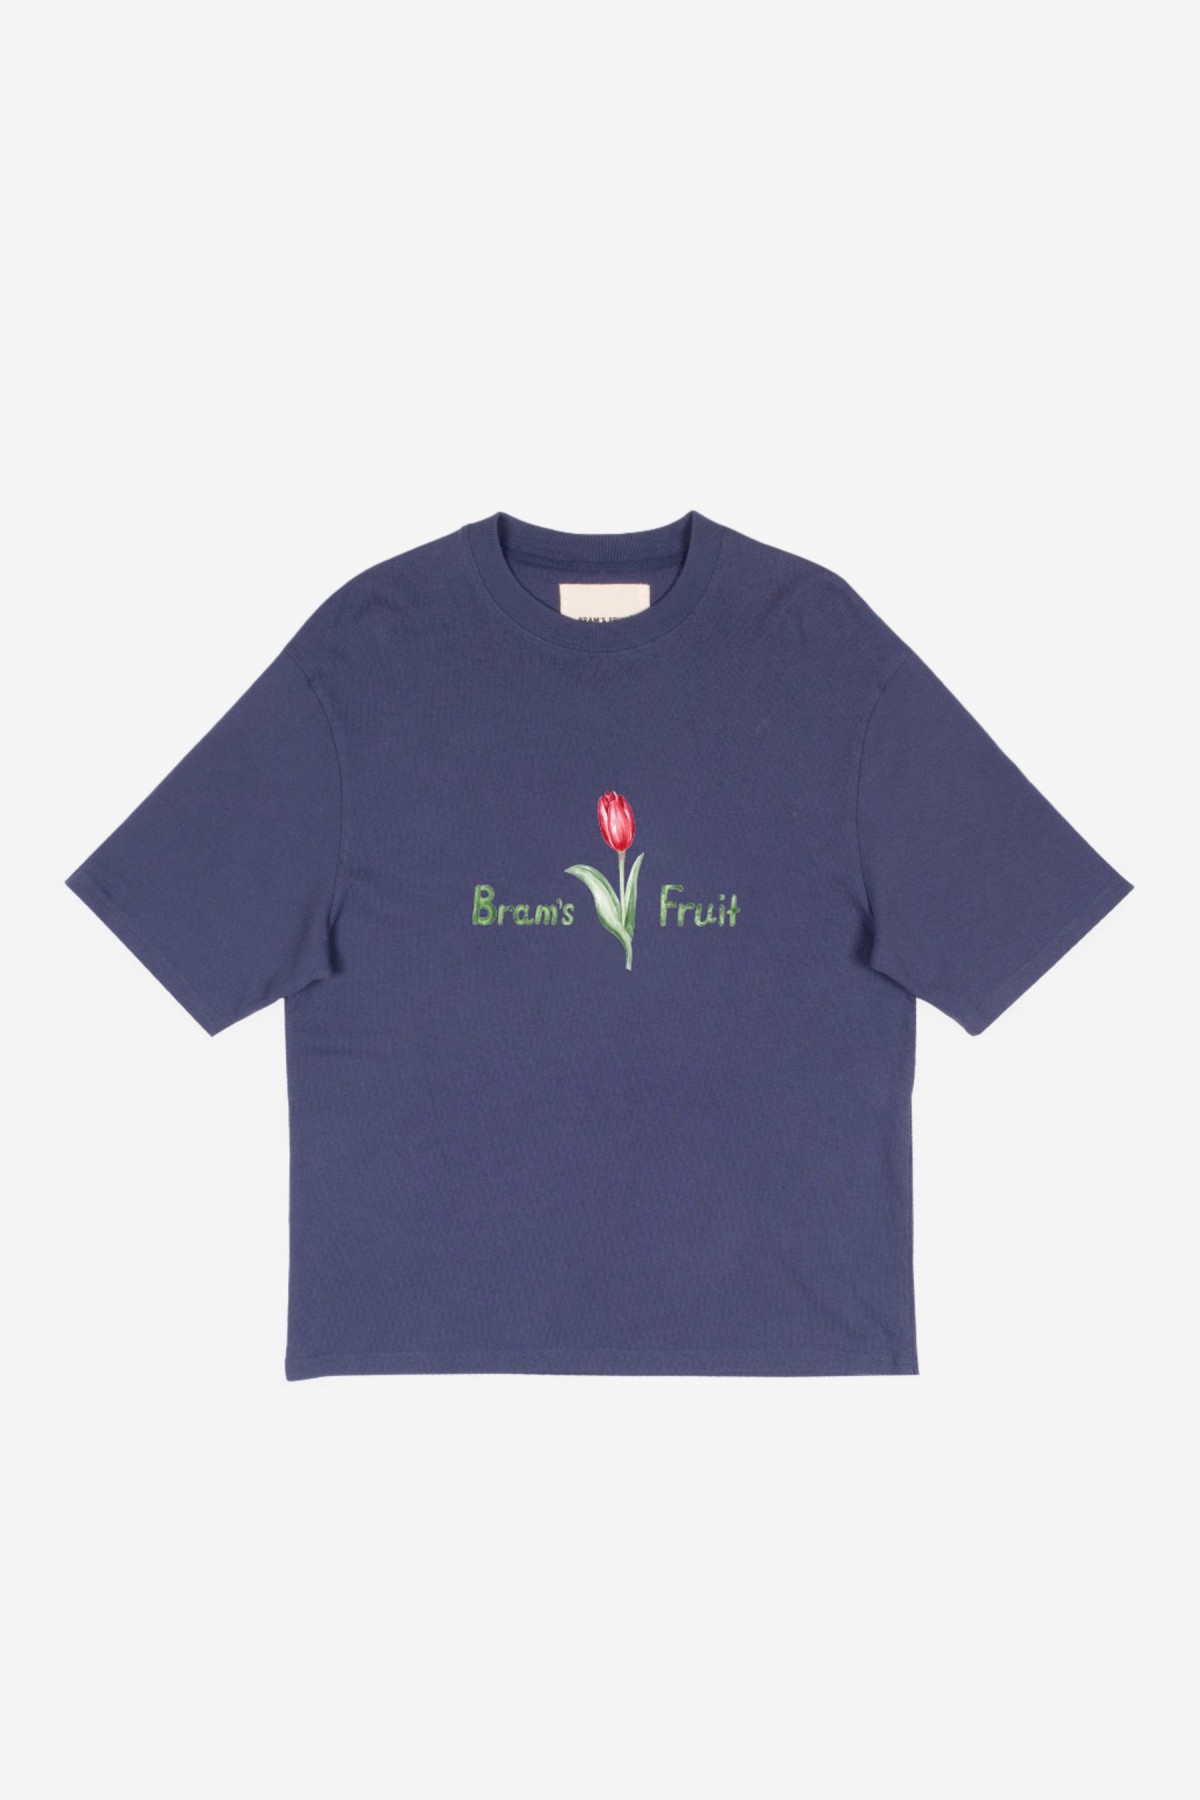 Bram's Fruit Tulip Aquarel T-Shirt in Blue